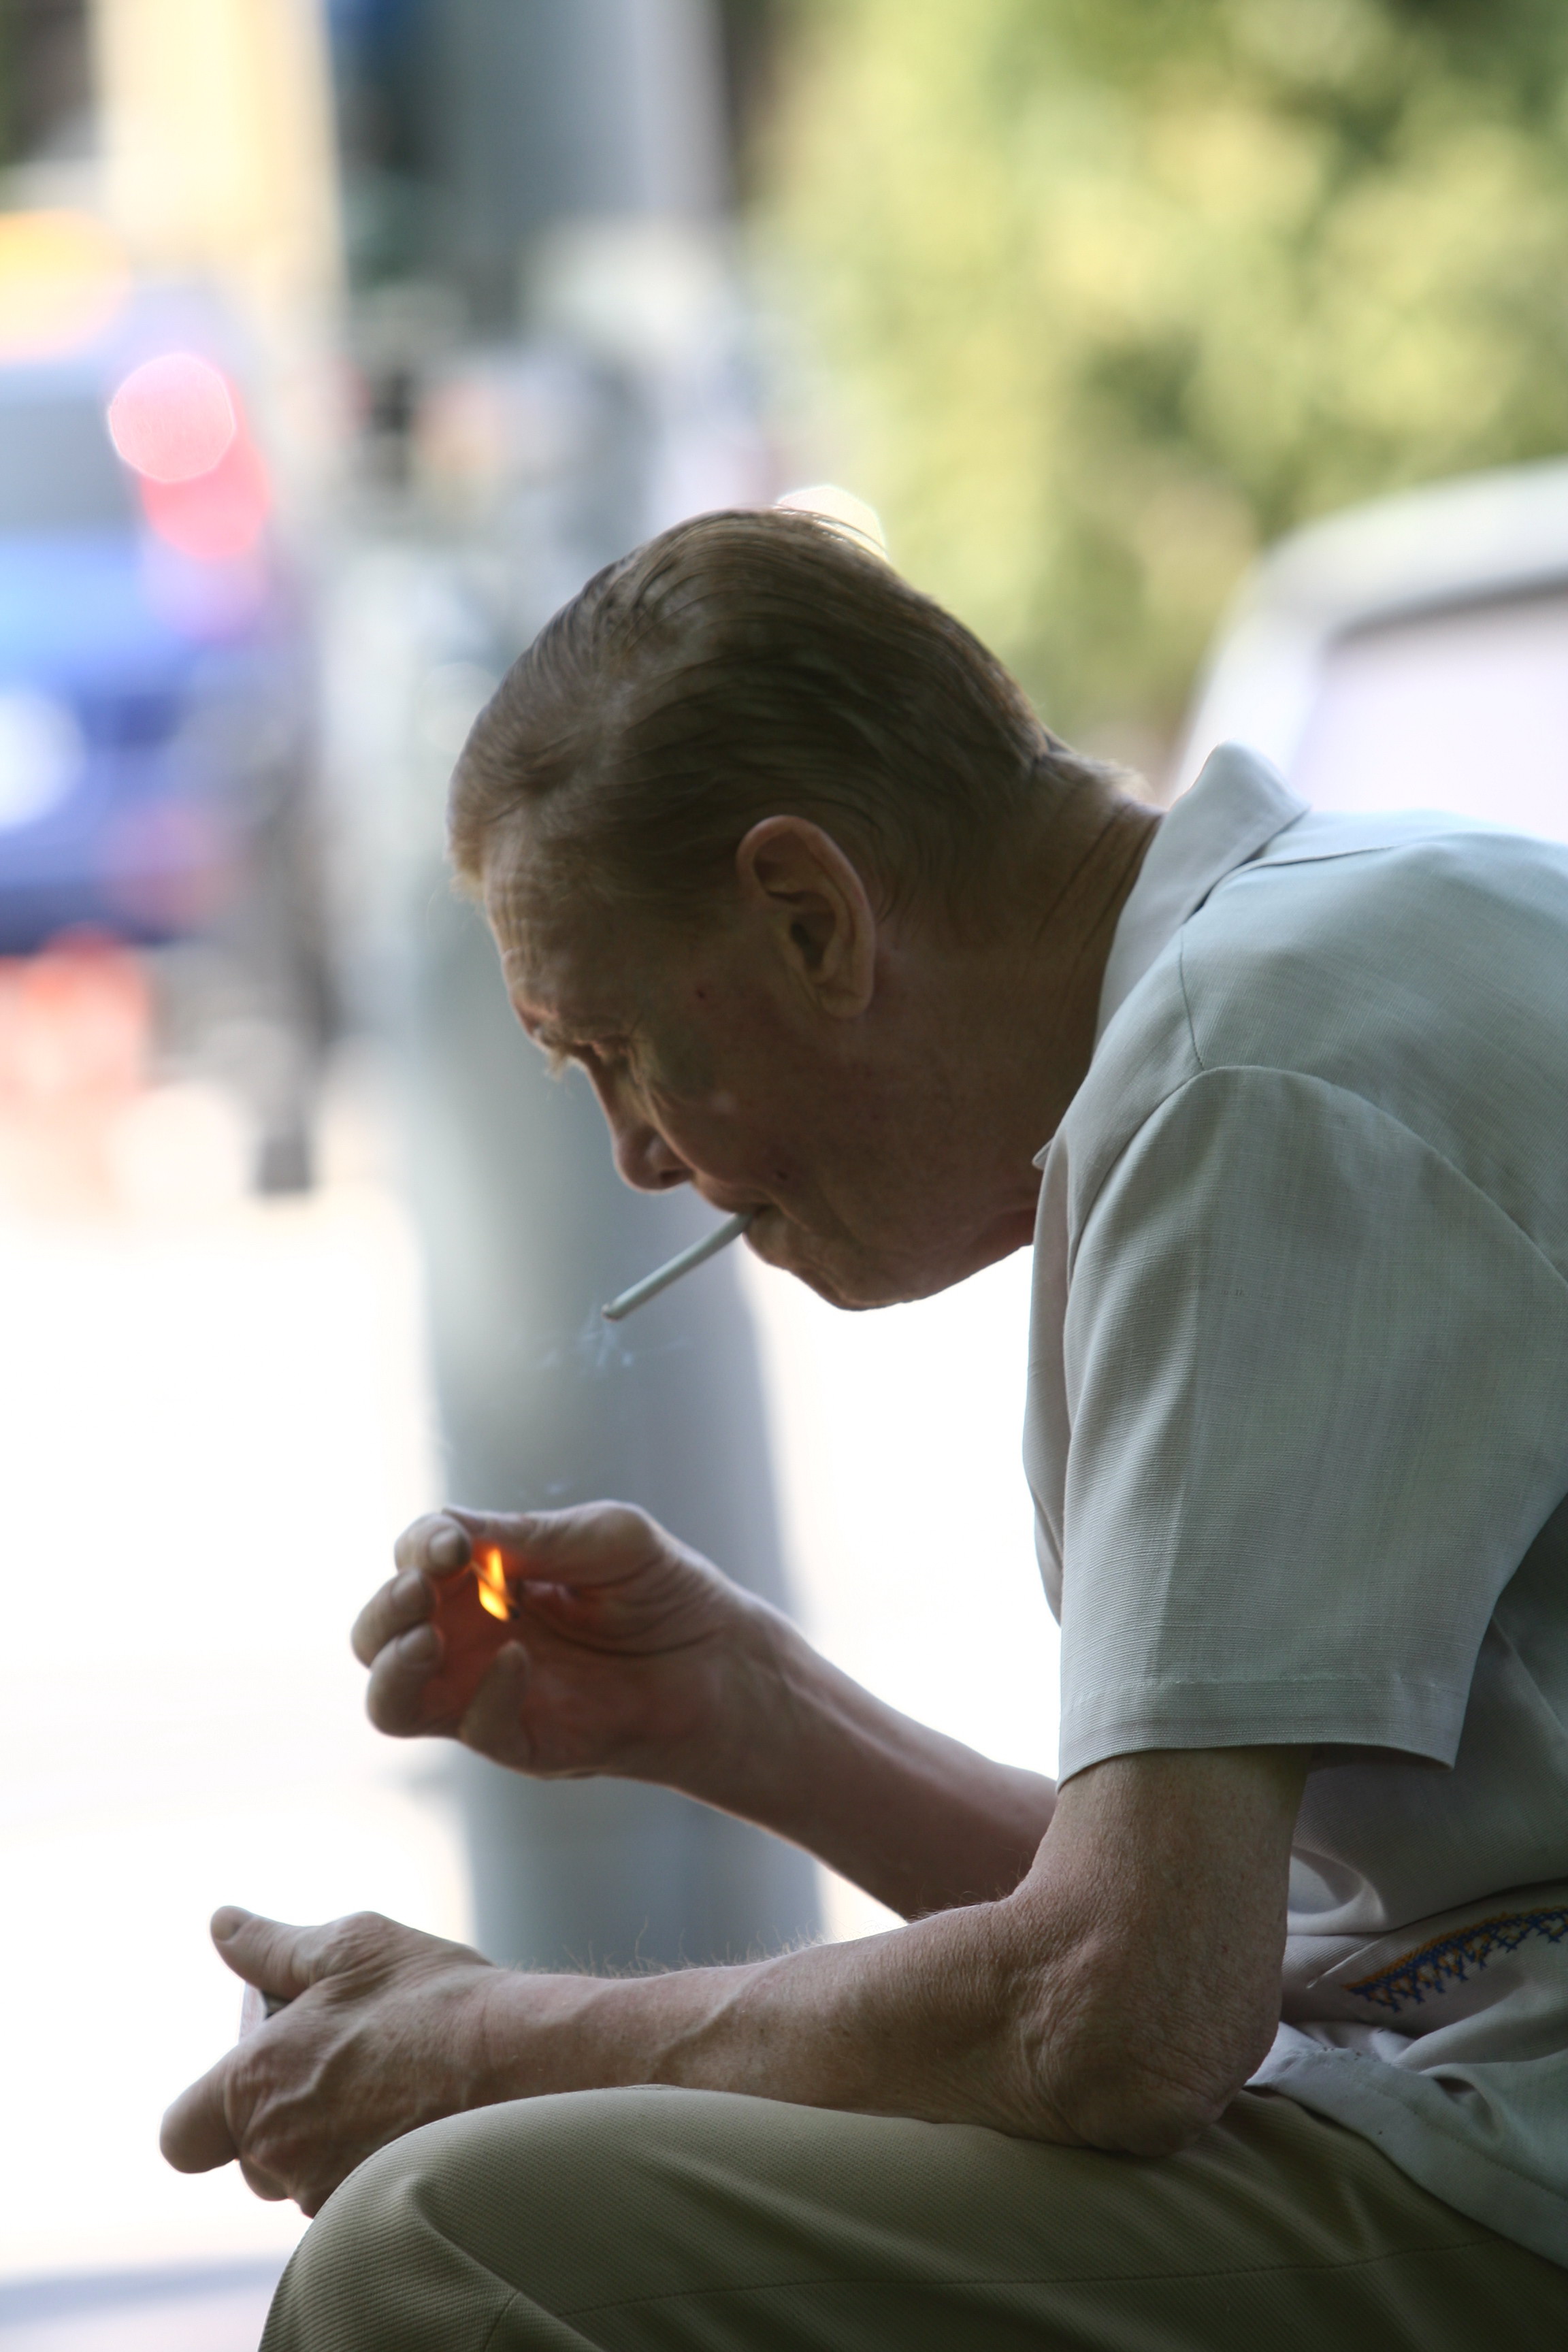 Будут ли экономить курильщики на сигаретах?
Фото Максима Люкова с сайта kp.ua